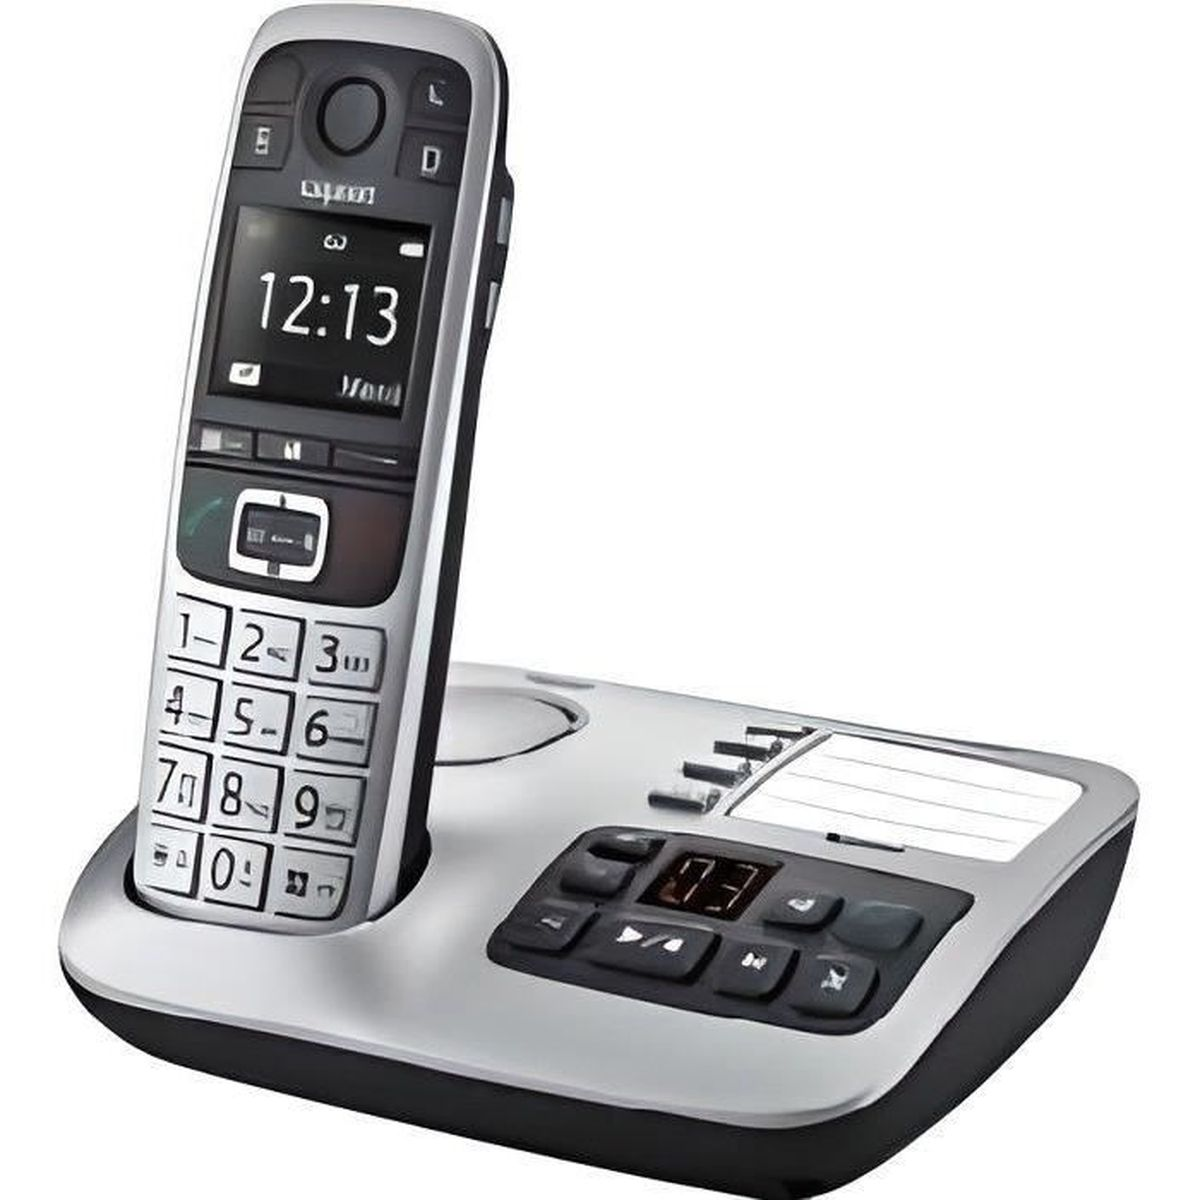 GIGASET E560A Festnetztelefon